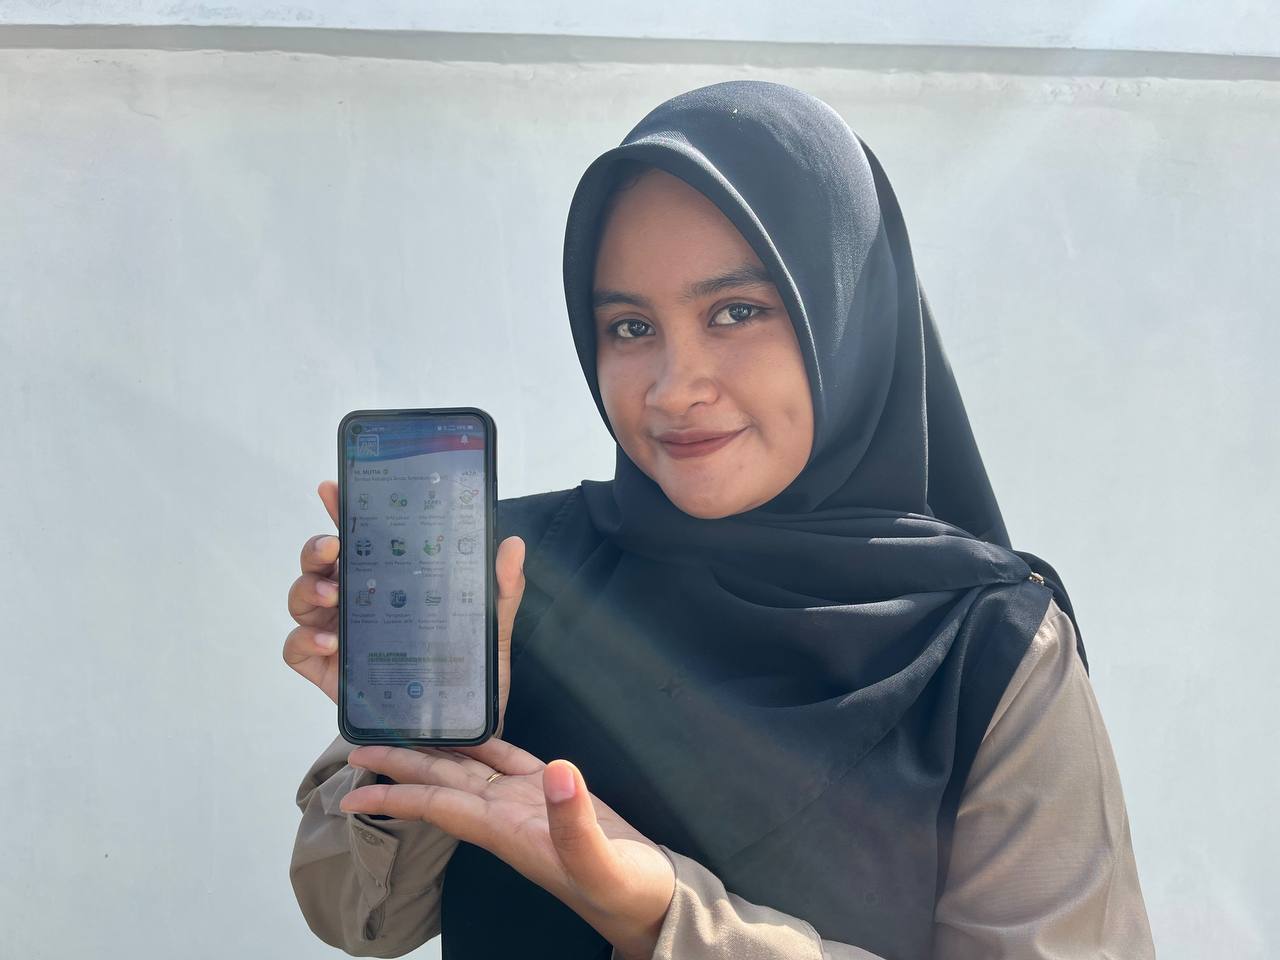 Pengkuan Mutia, Aplikasi Mobile JKN Bikin Peserta Tak Repot-Repot Ubah Data, Gampang Banget